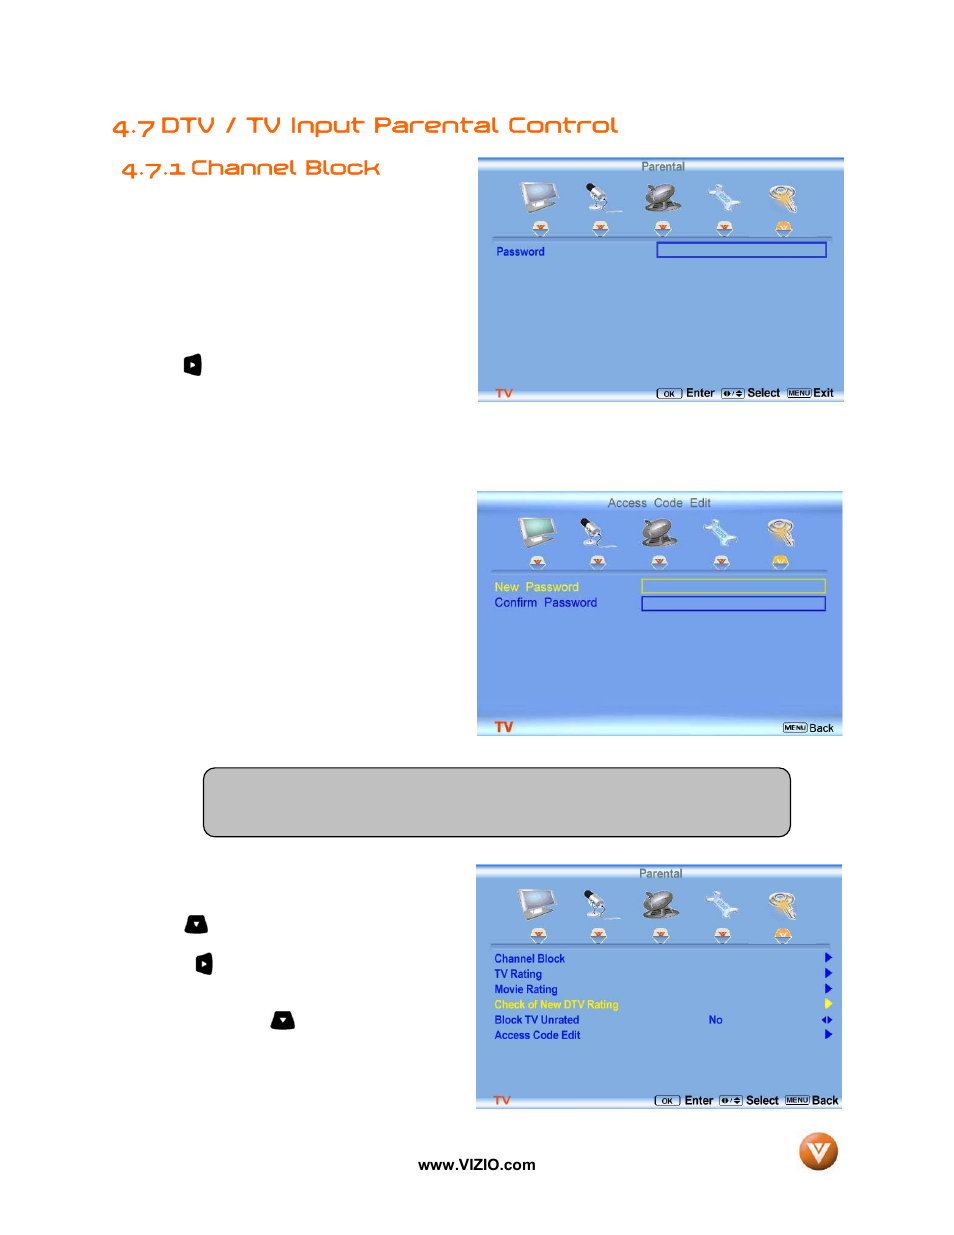 7 dtv / tv input parental control, Channel block, 1 channel block | Vizio GV46L FHDTV20A User Manual | Page 51 / 85